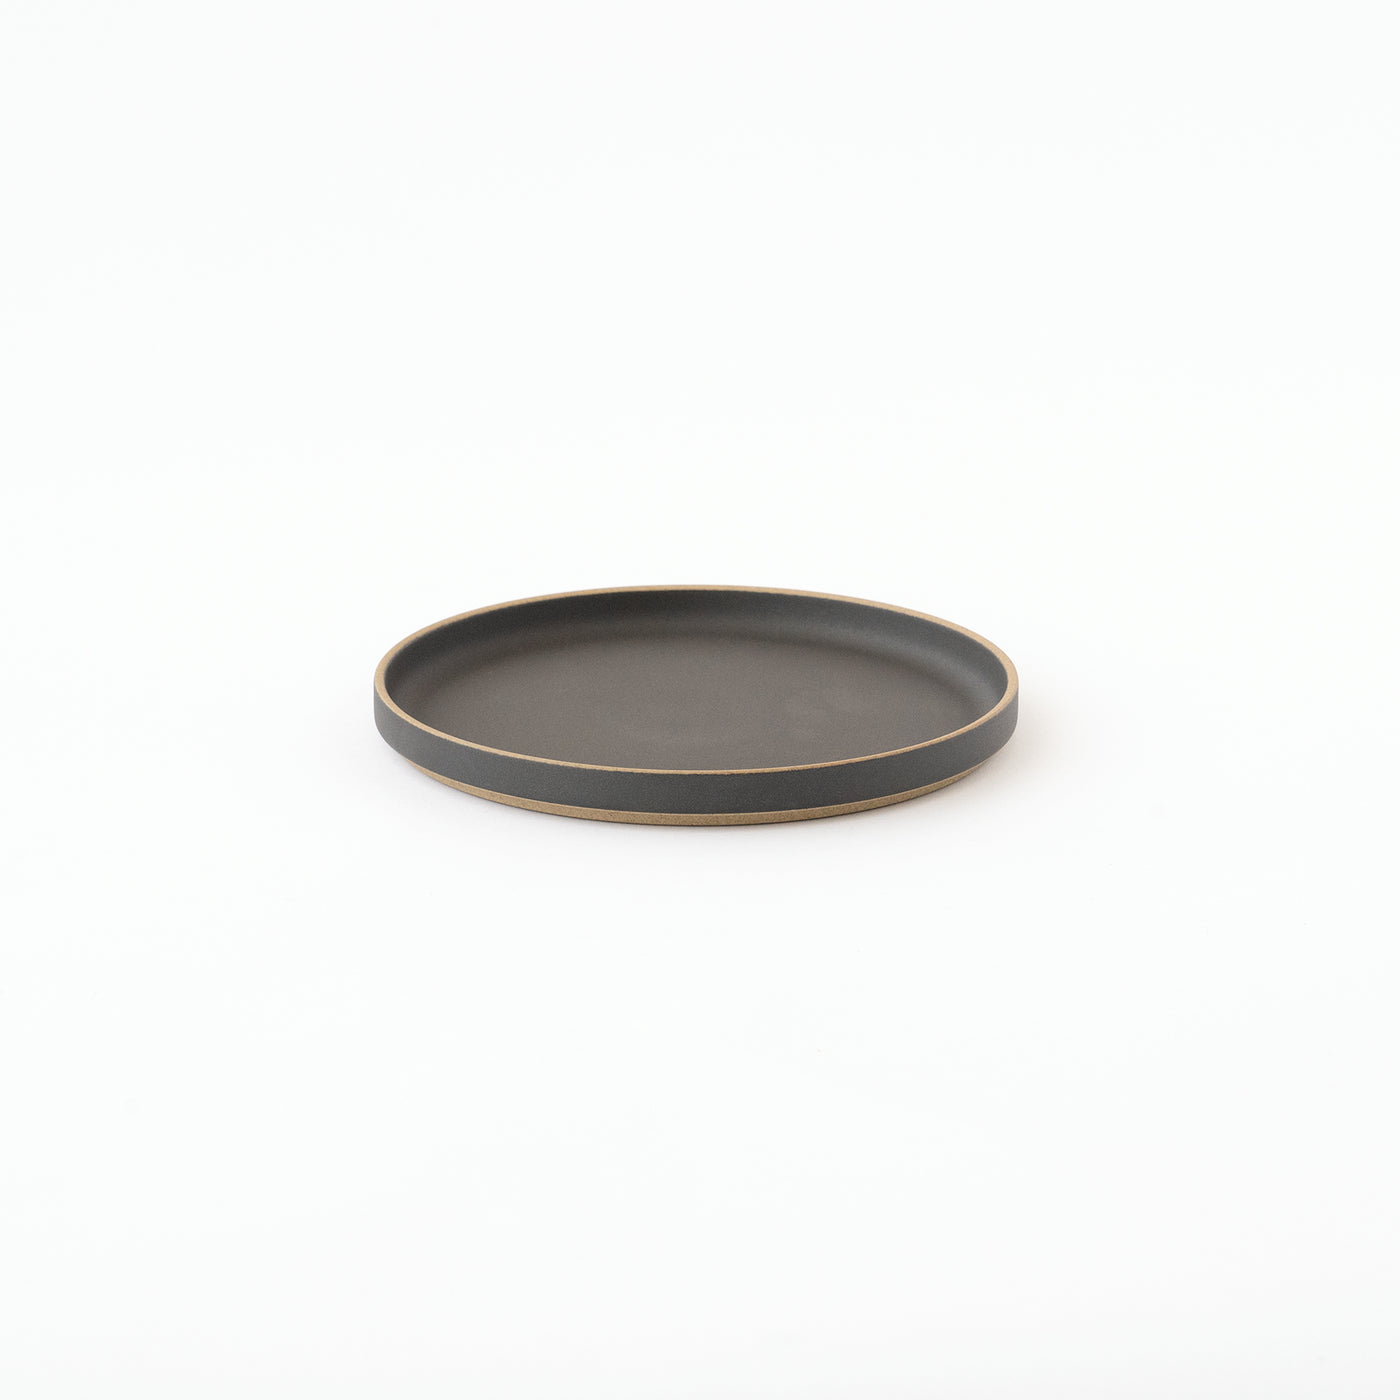 Hasami Porcelain Plate 8 5/8" Black